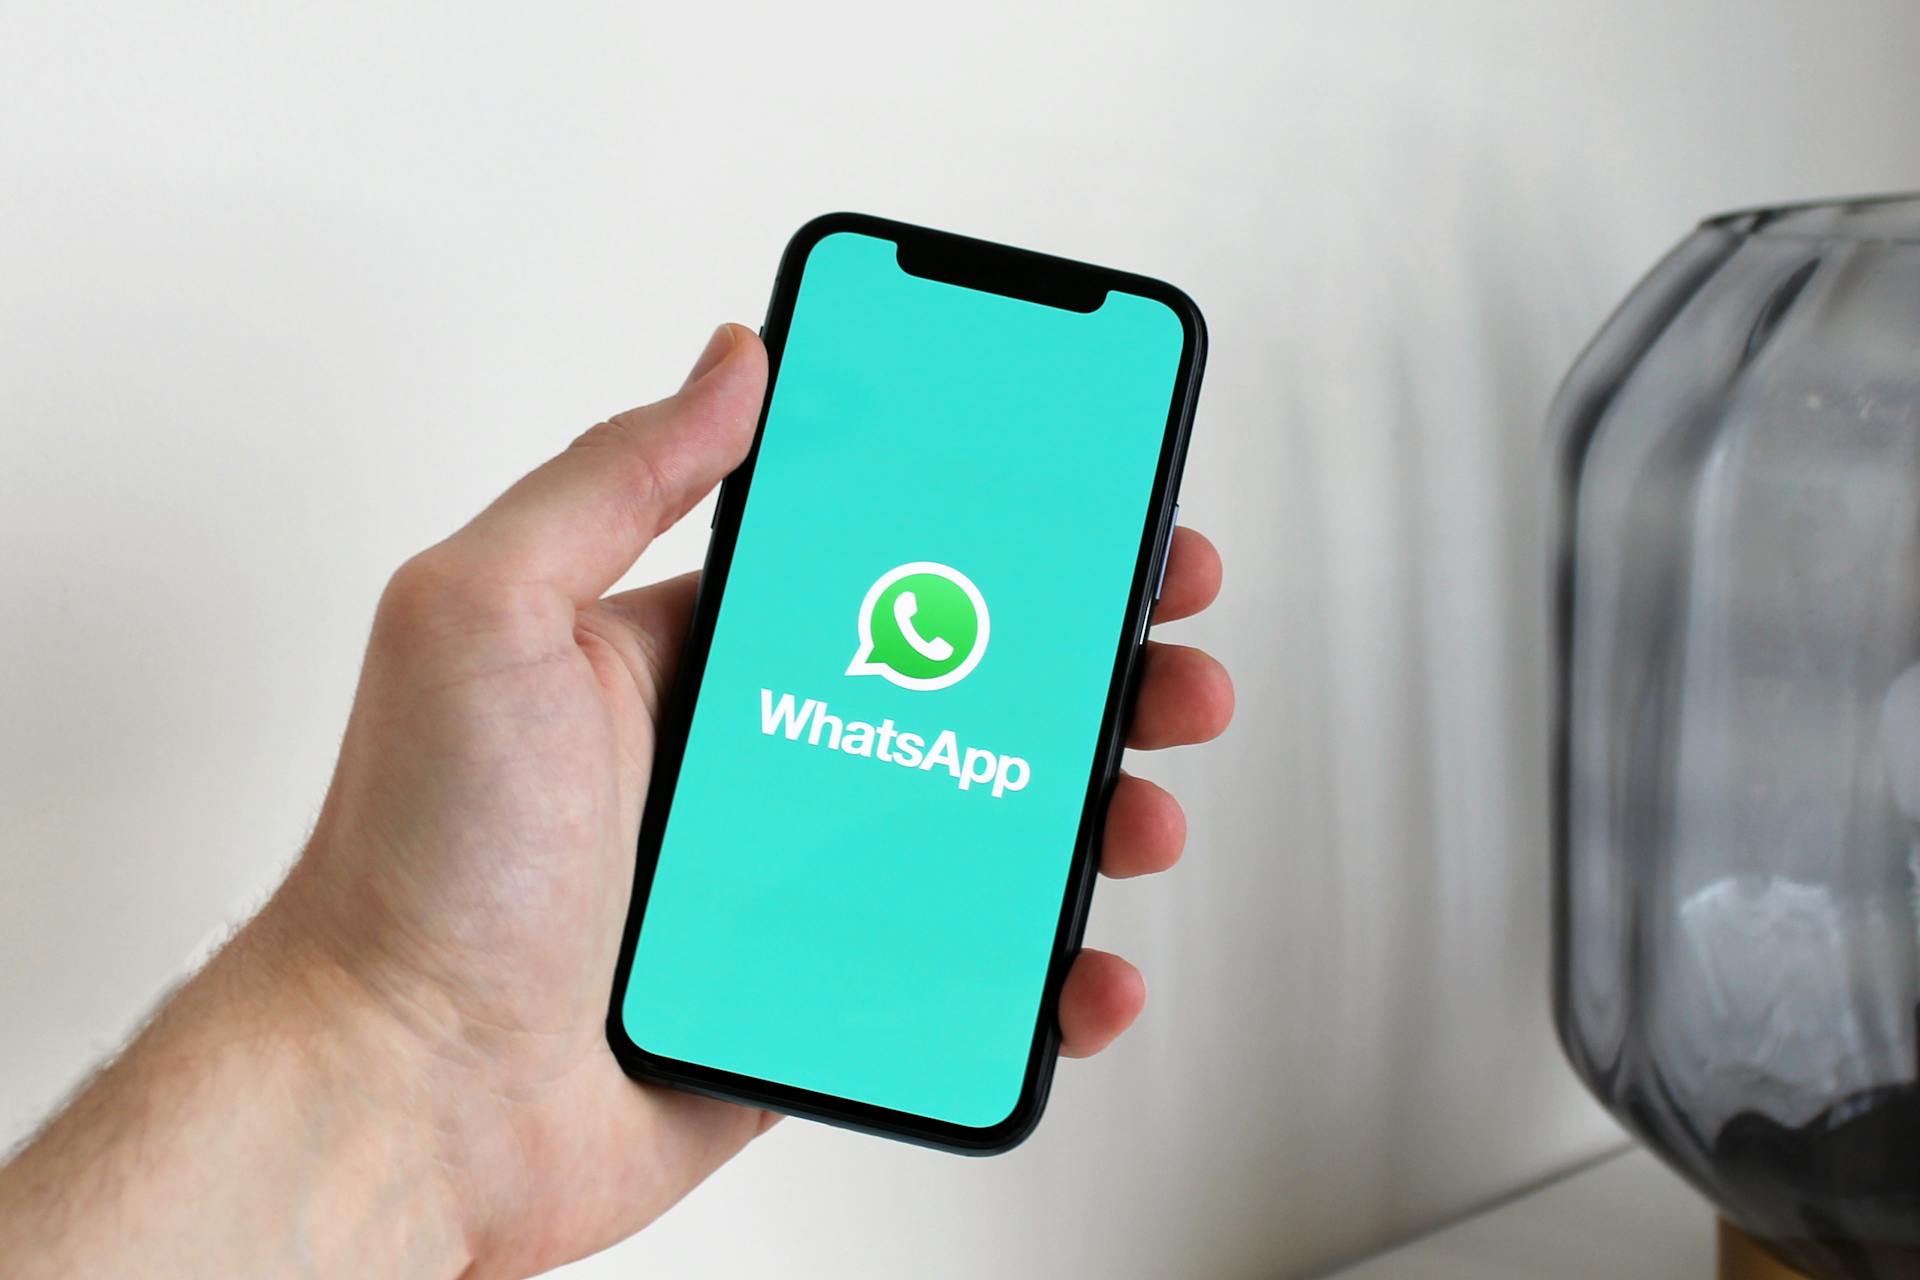 WhatsApp boodskappe met regsgevolge in SA